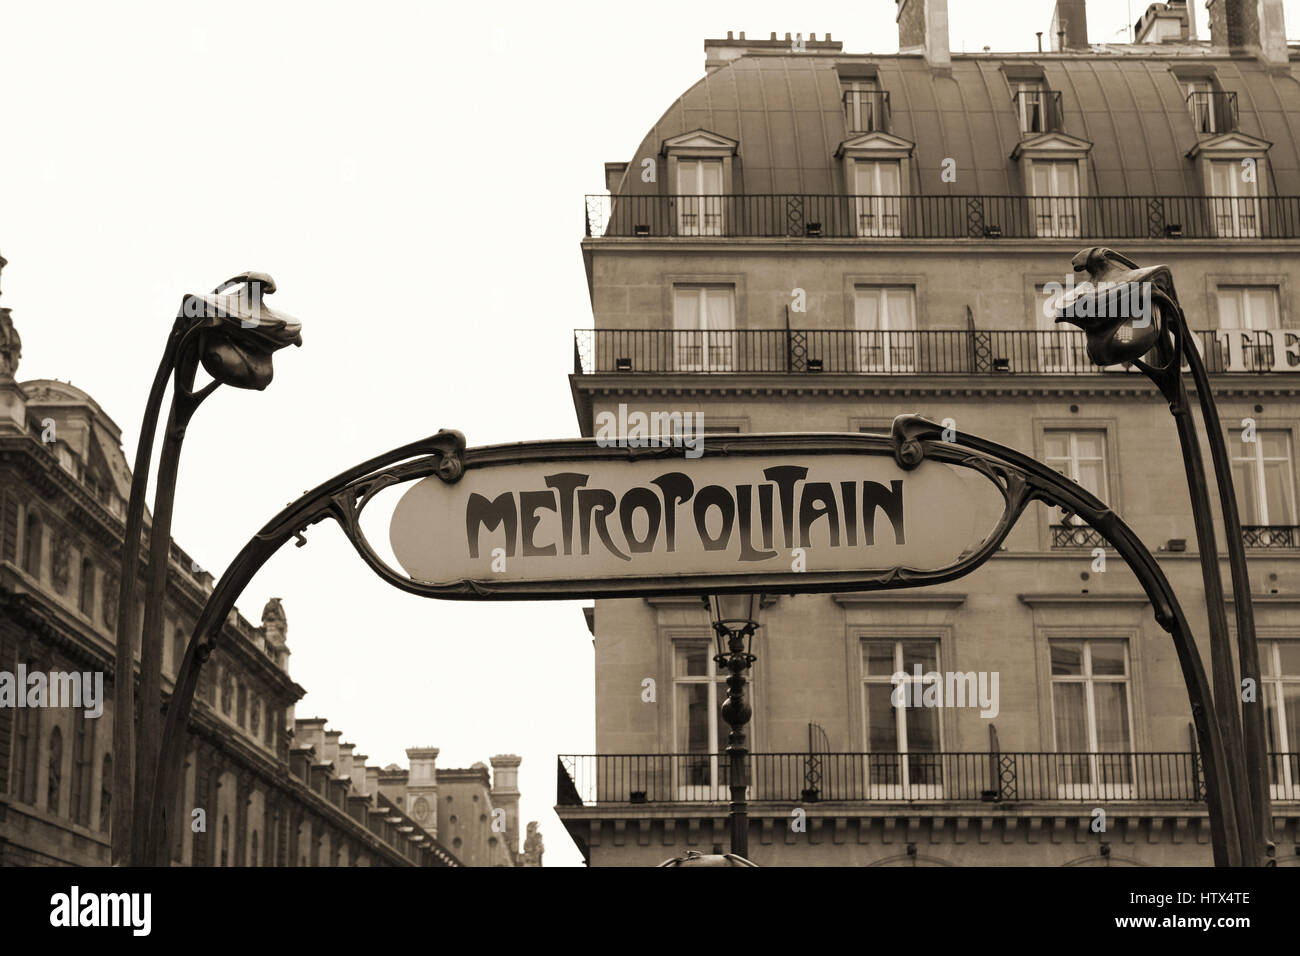 Metropolitan sign Paris, France Stock Photo